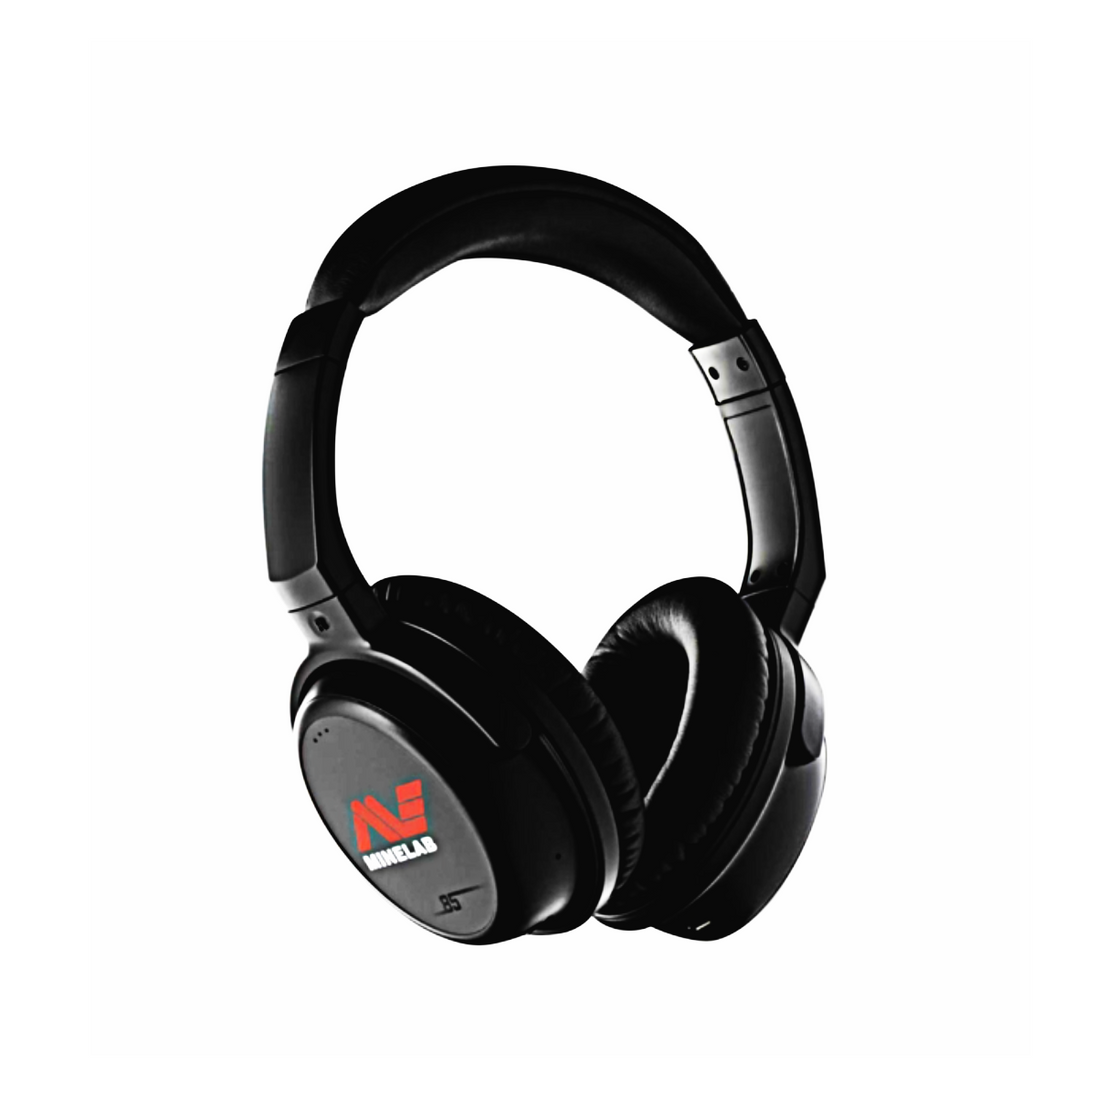 Minelab Wireless Headphones ML-85 for Equinox 700/900 & X-Terra Pro